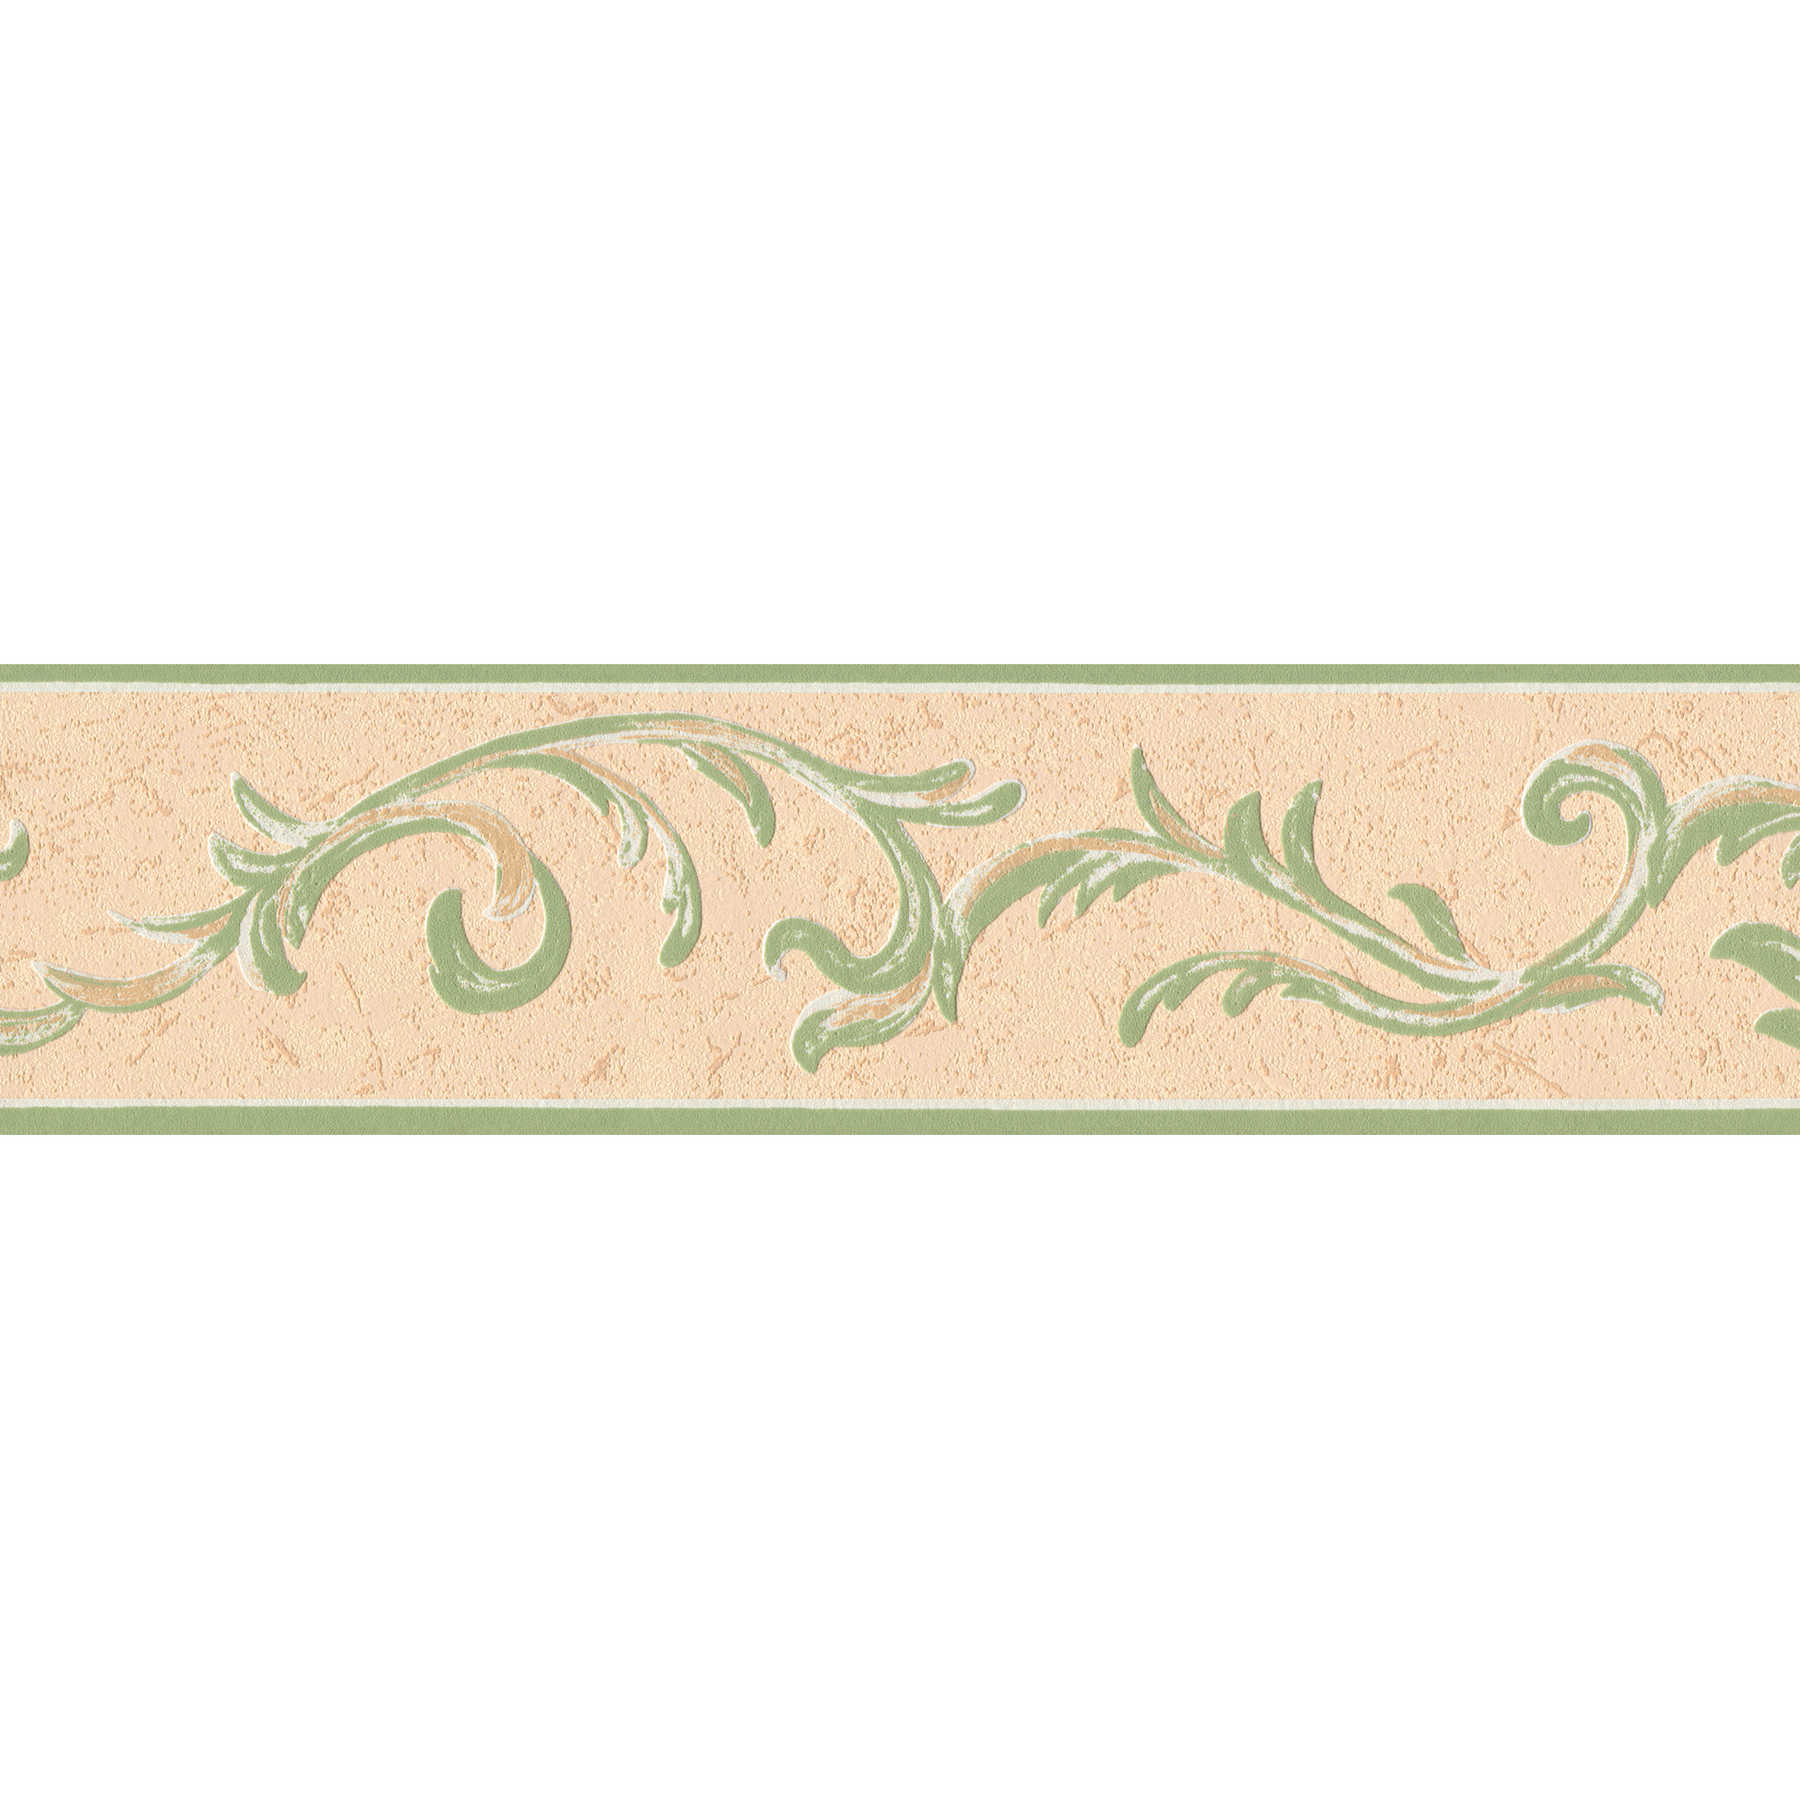         Tapetenbordüre mit floraler Ornament & Putzoptik – Beige, Grün
    